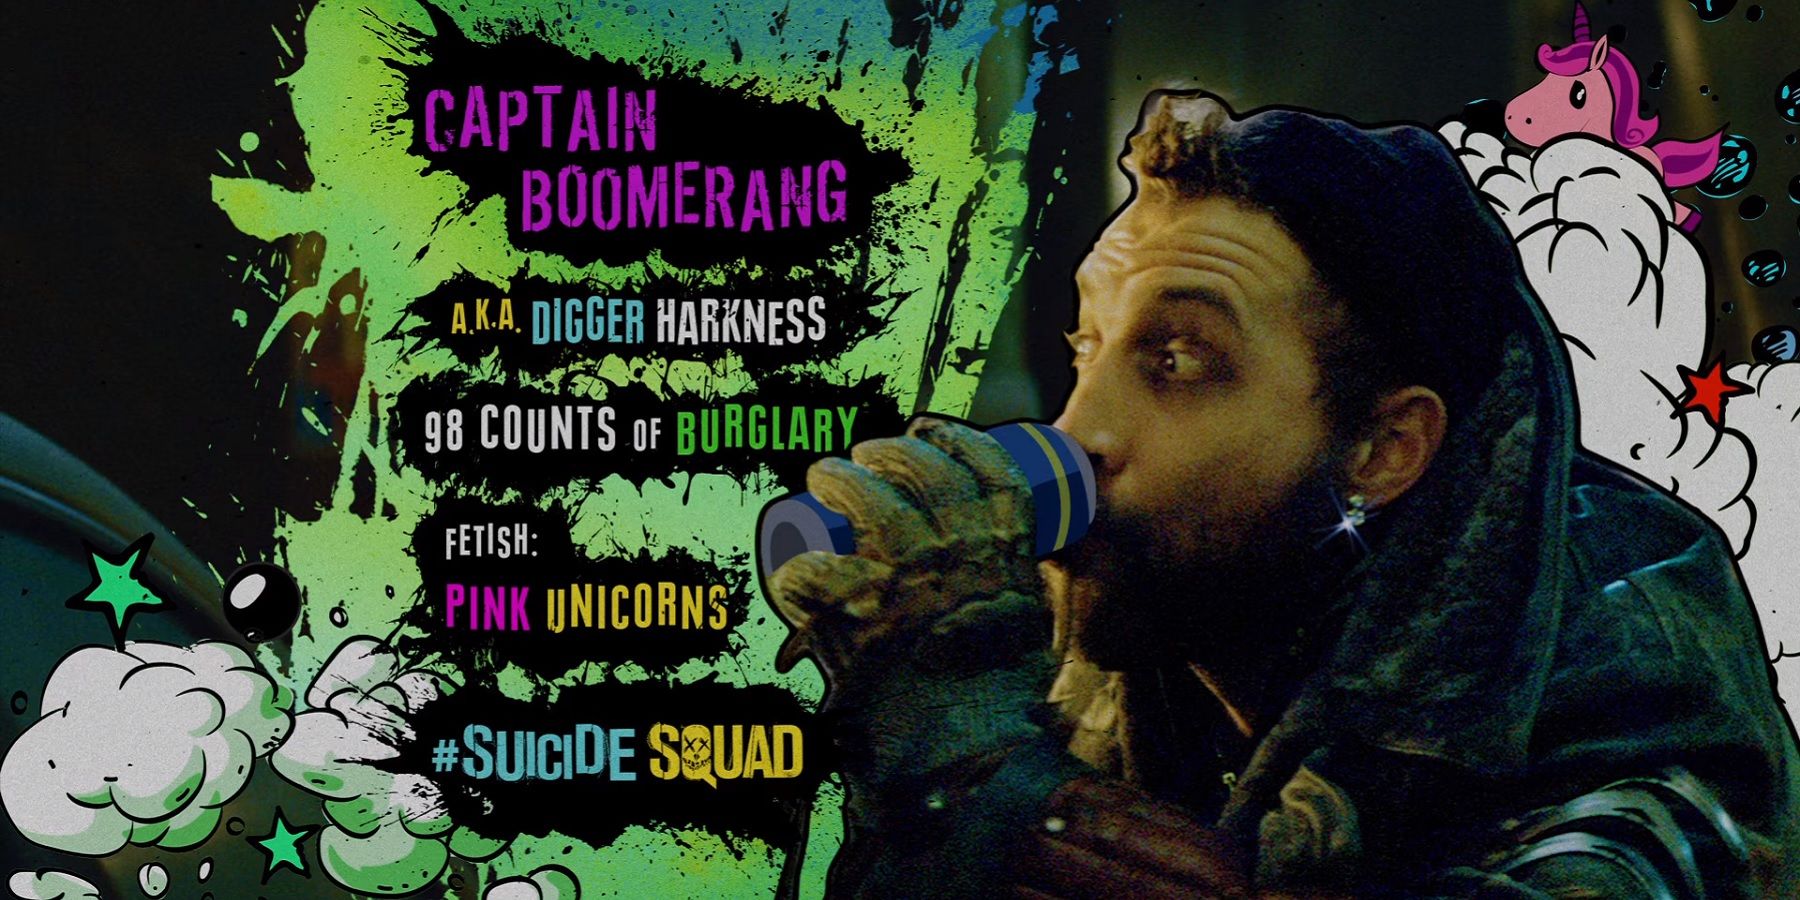 Suicide-Squad-Captain-Boomerang-character-breakdown.jpg